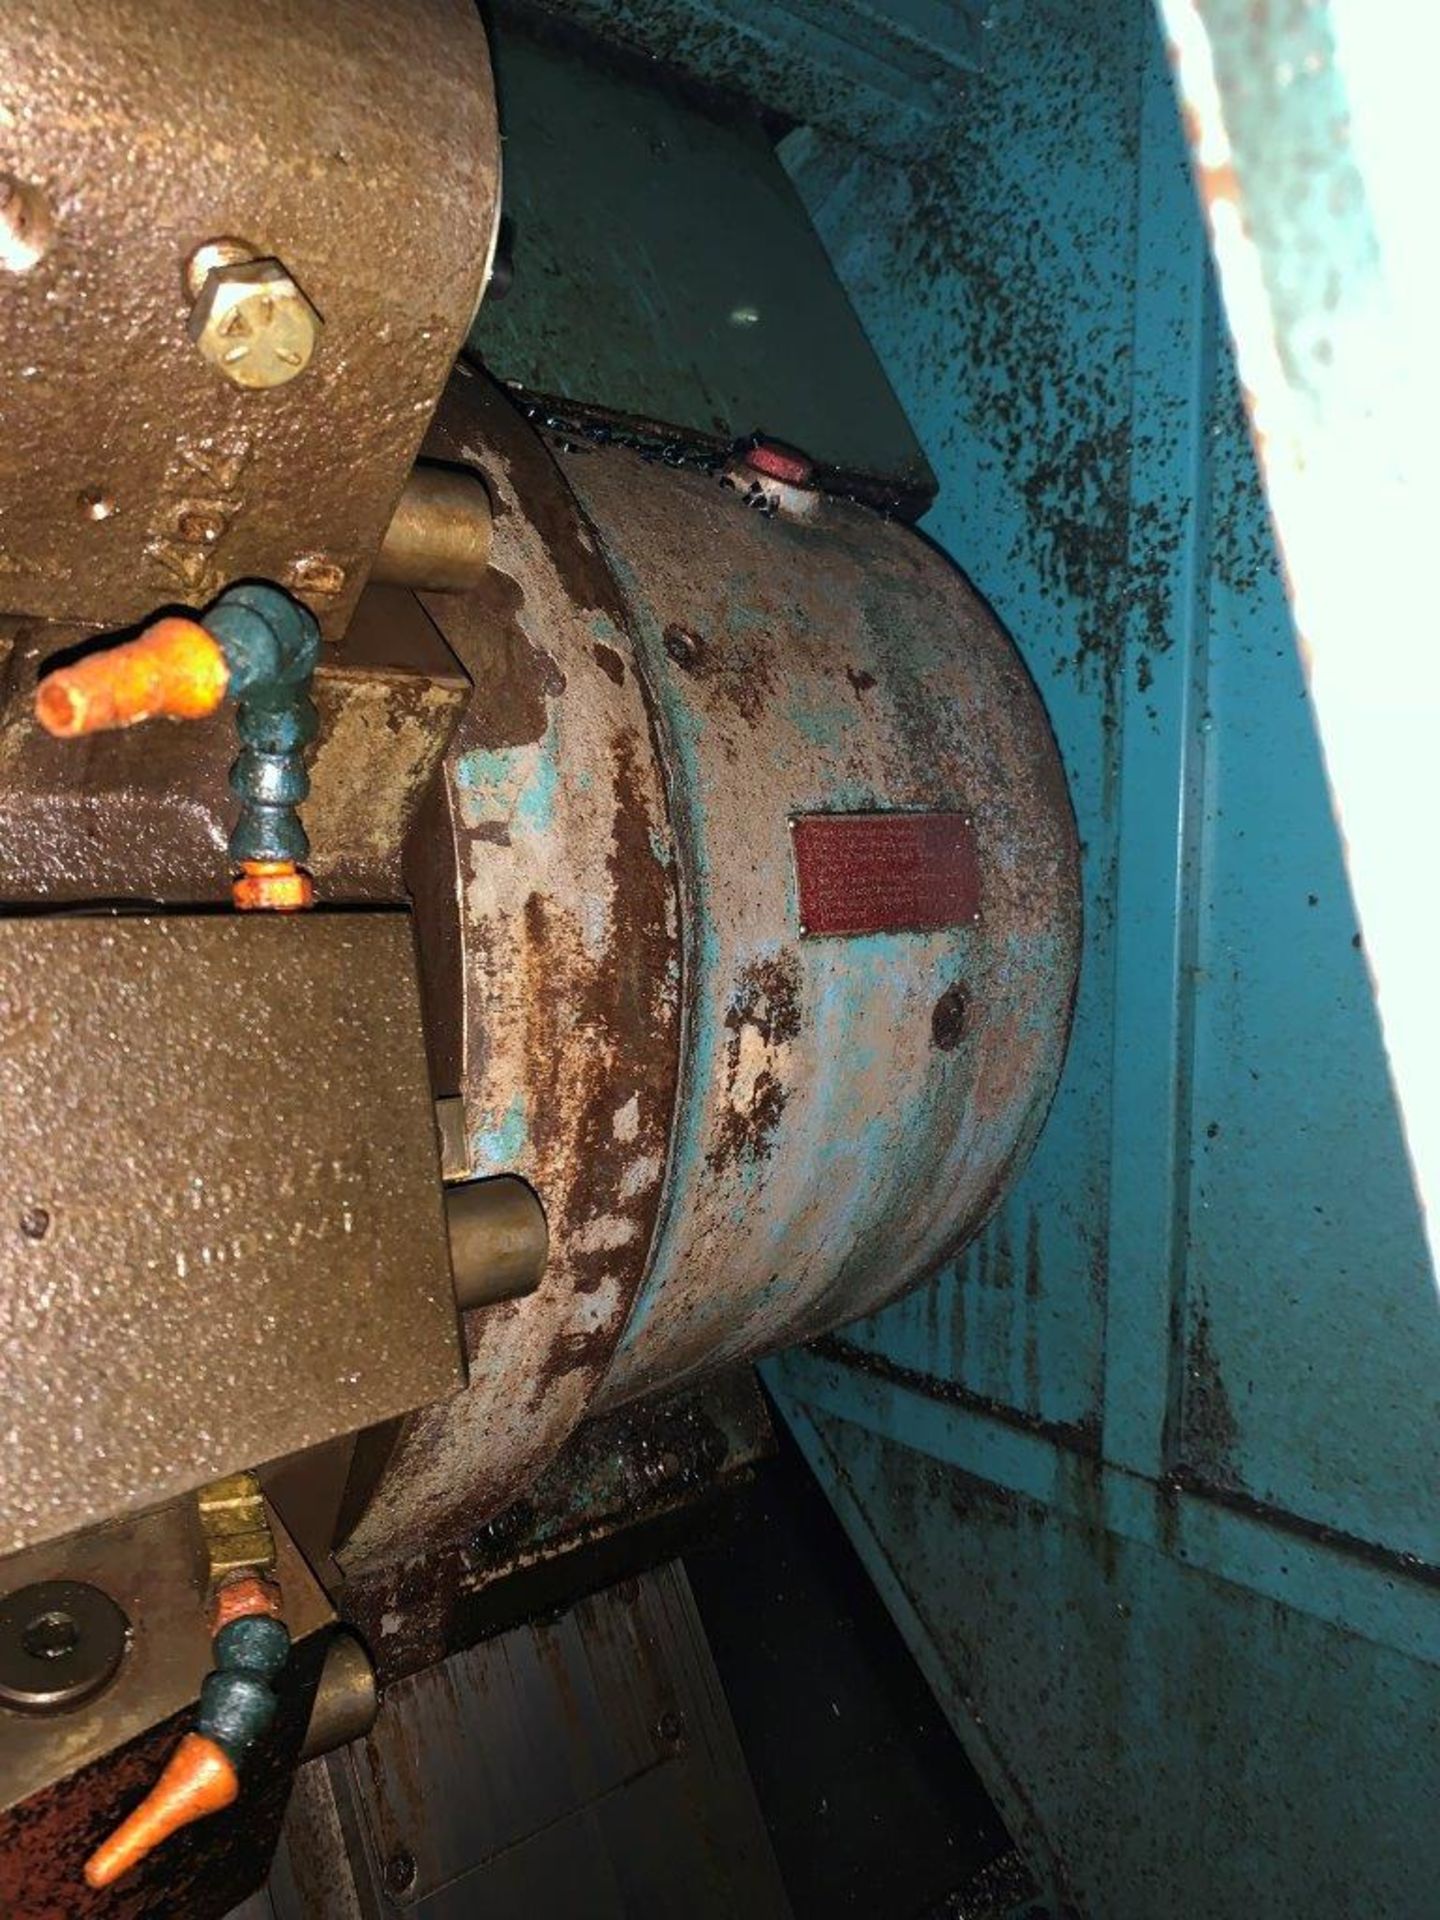 1983 MAZAK SLANT TURN 40N LATHE CNC, 14“ DIAMETER., S/N 54862 - Image 19 of 27